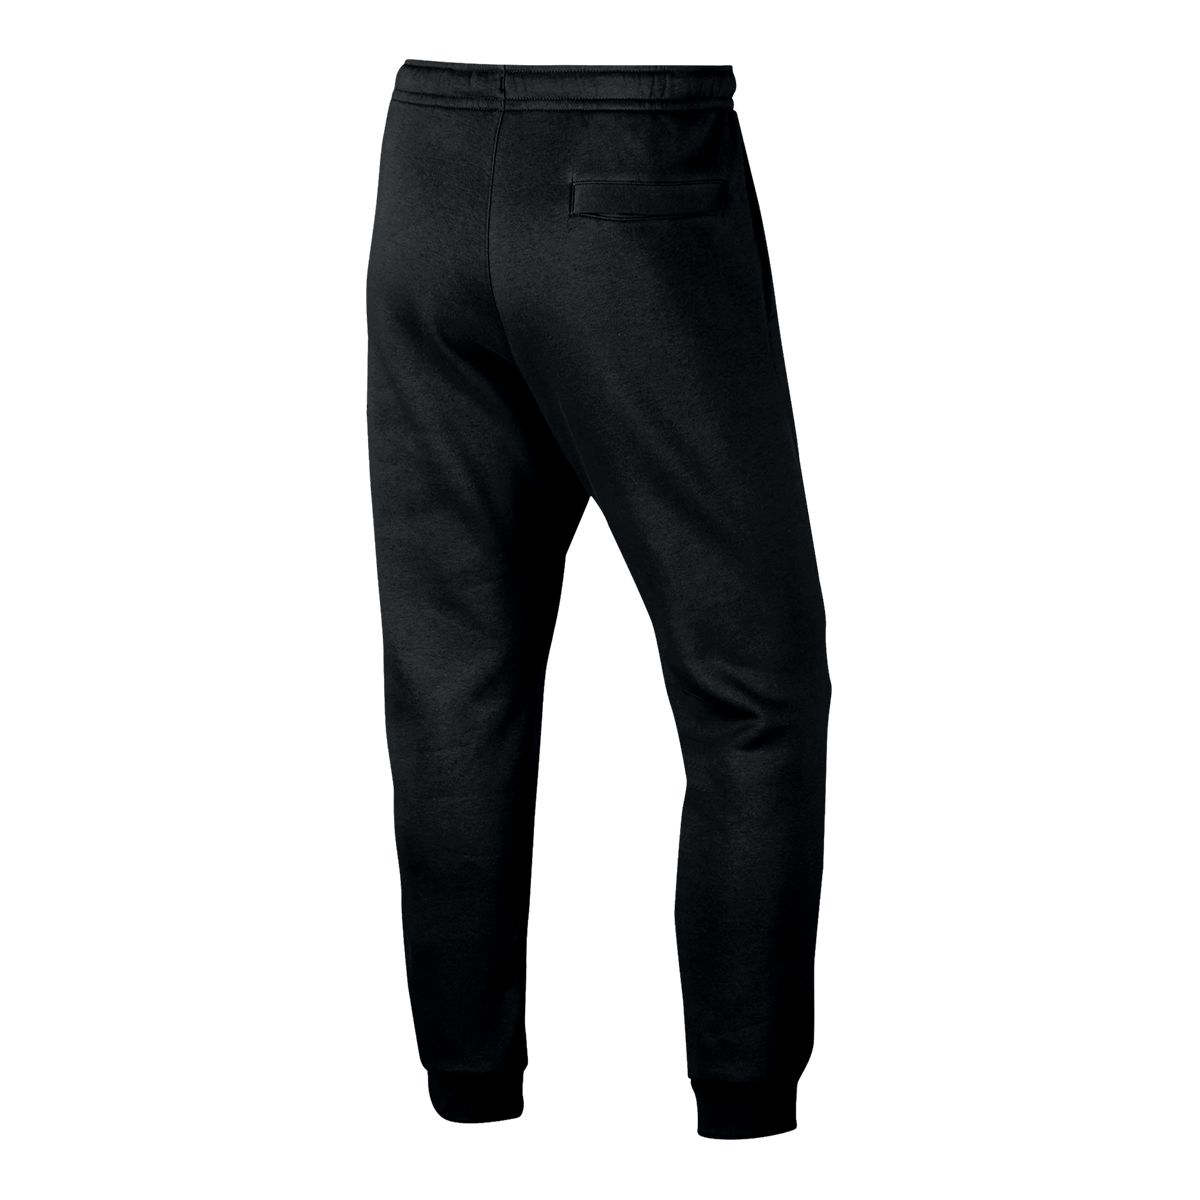 Nike Club Fleece Sportswear Men's Jogger Pants Black/White 804408-010 -  Walmart.com